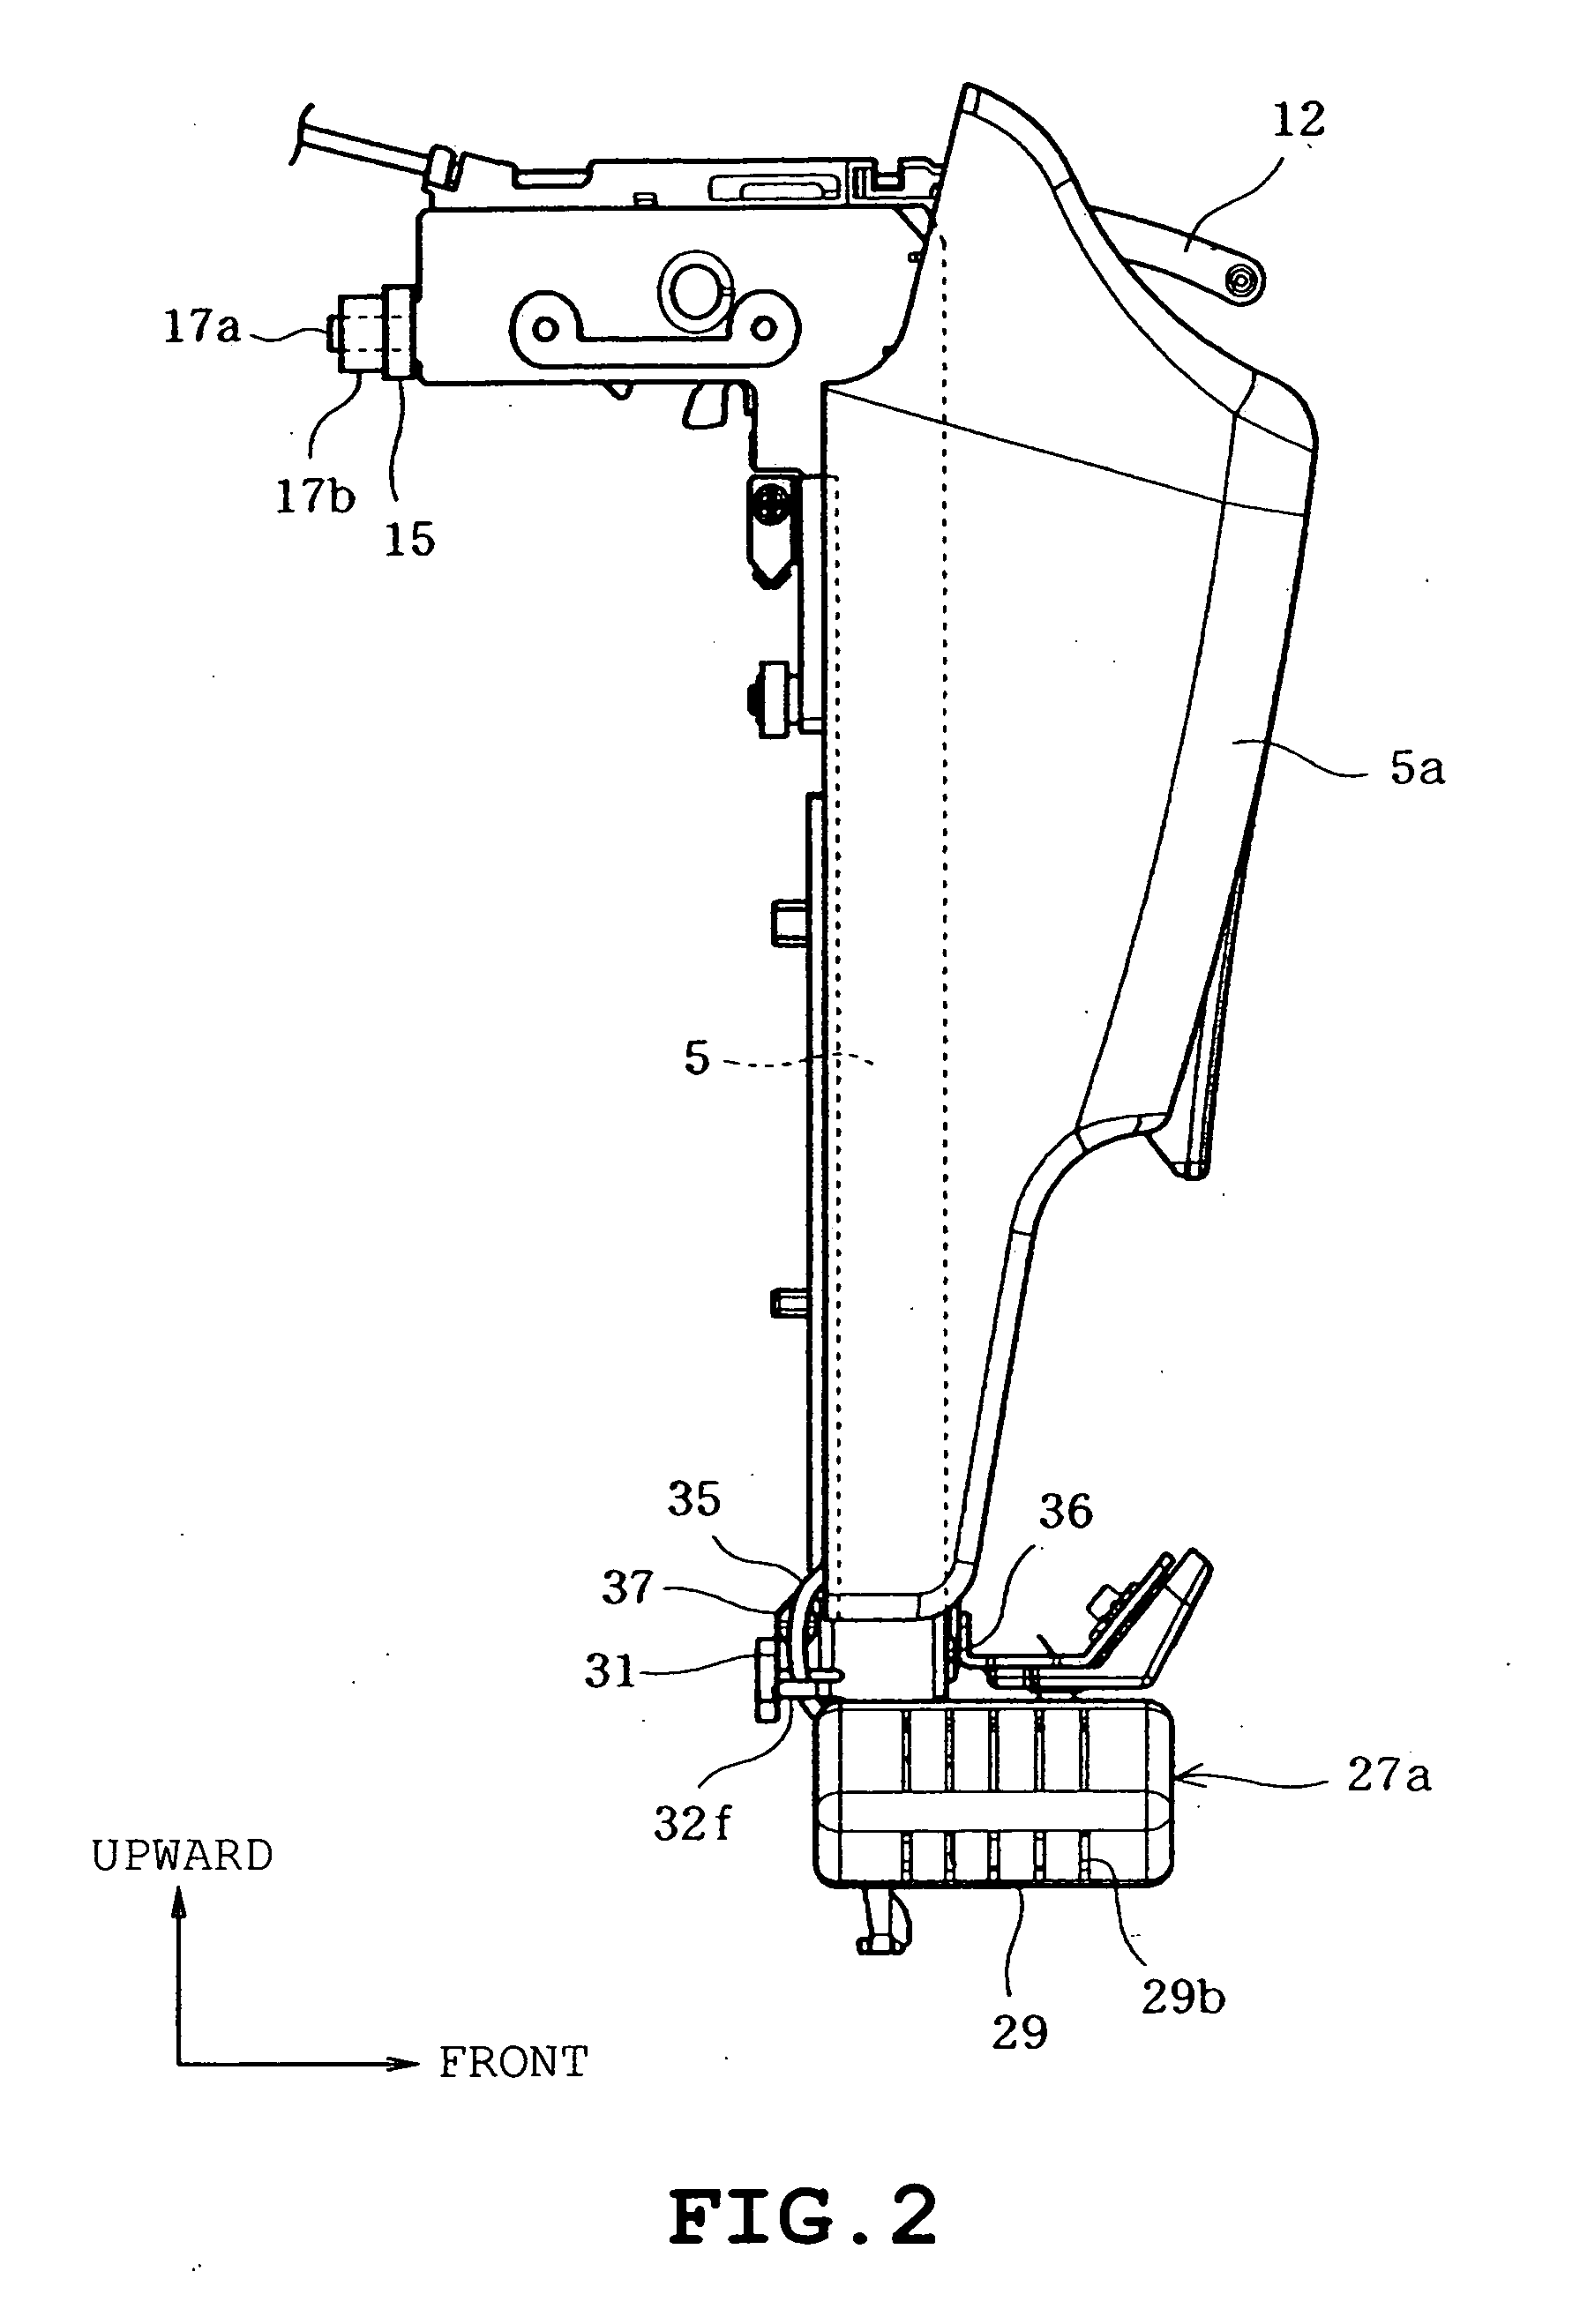 Illumination device for multineedle sewing machine and the multineedle sewing machine